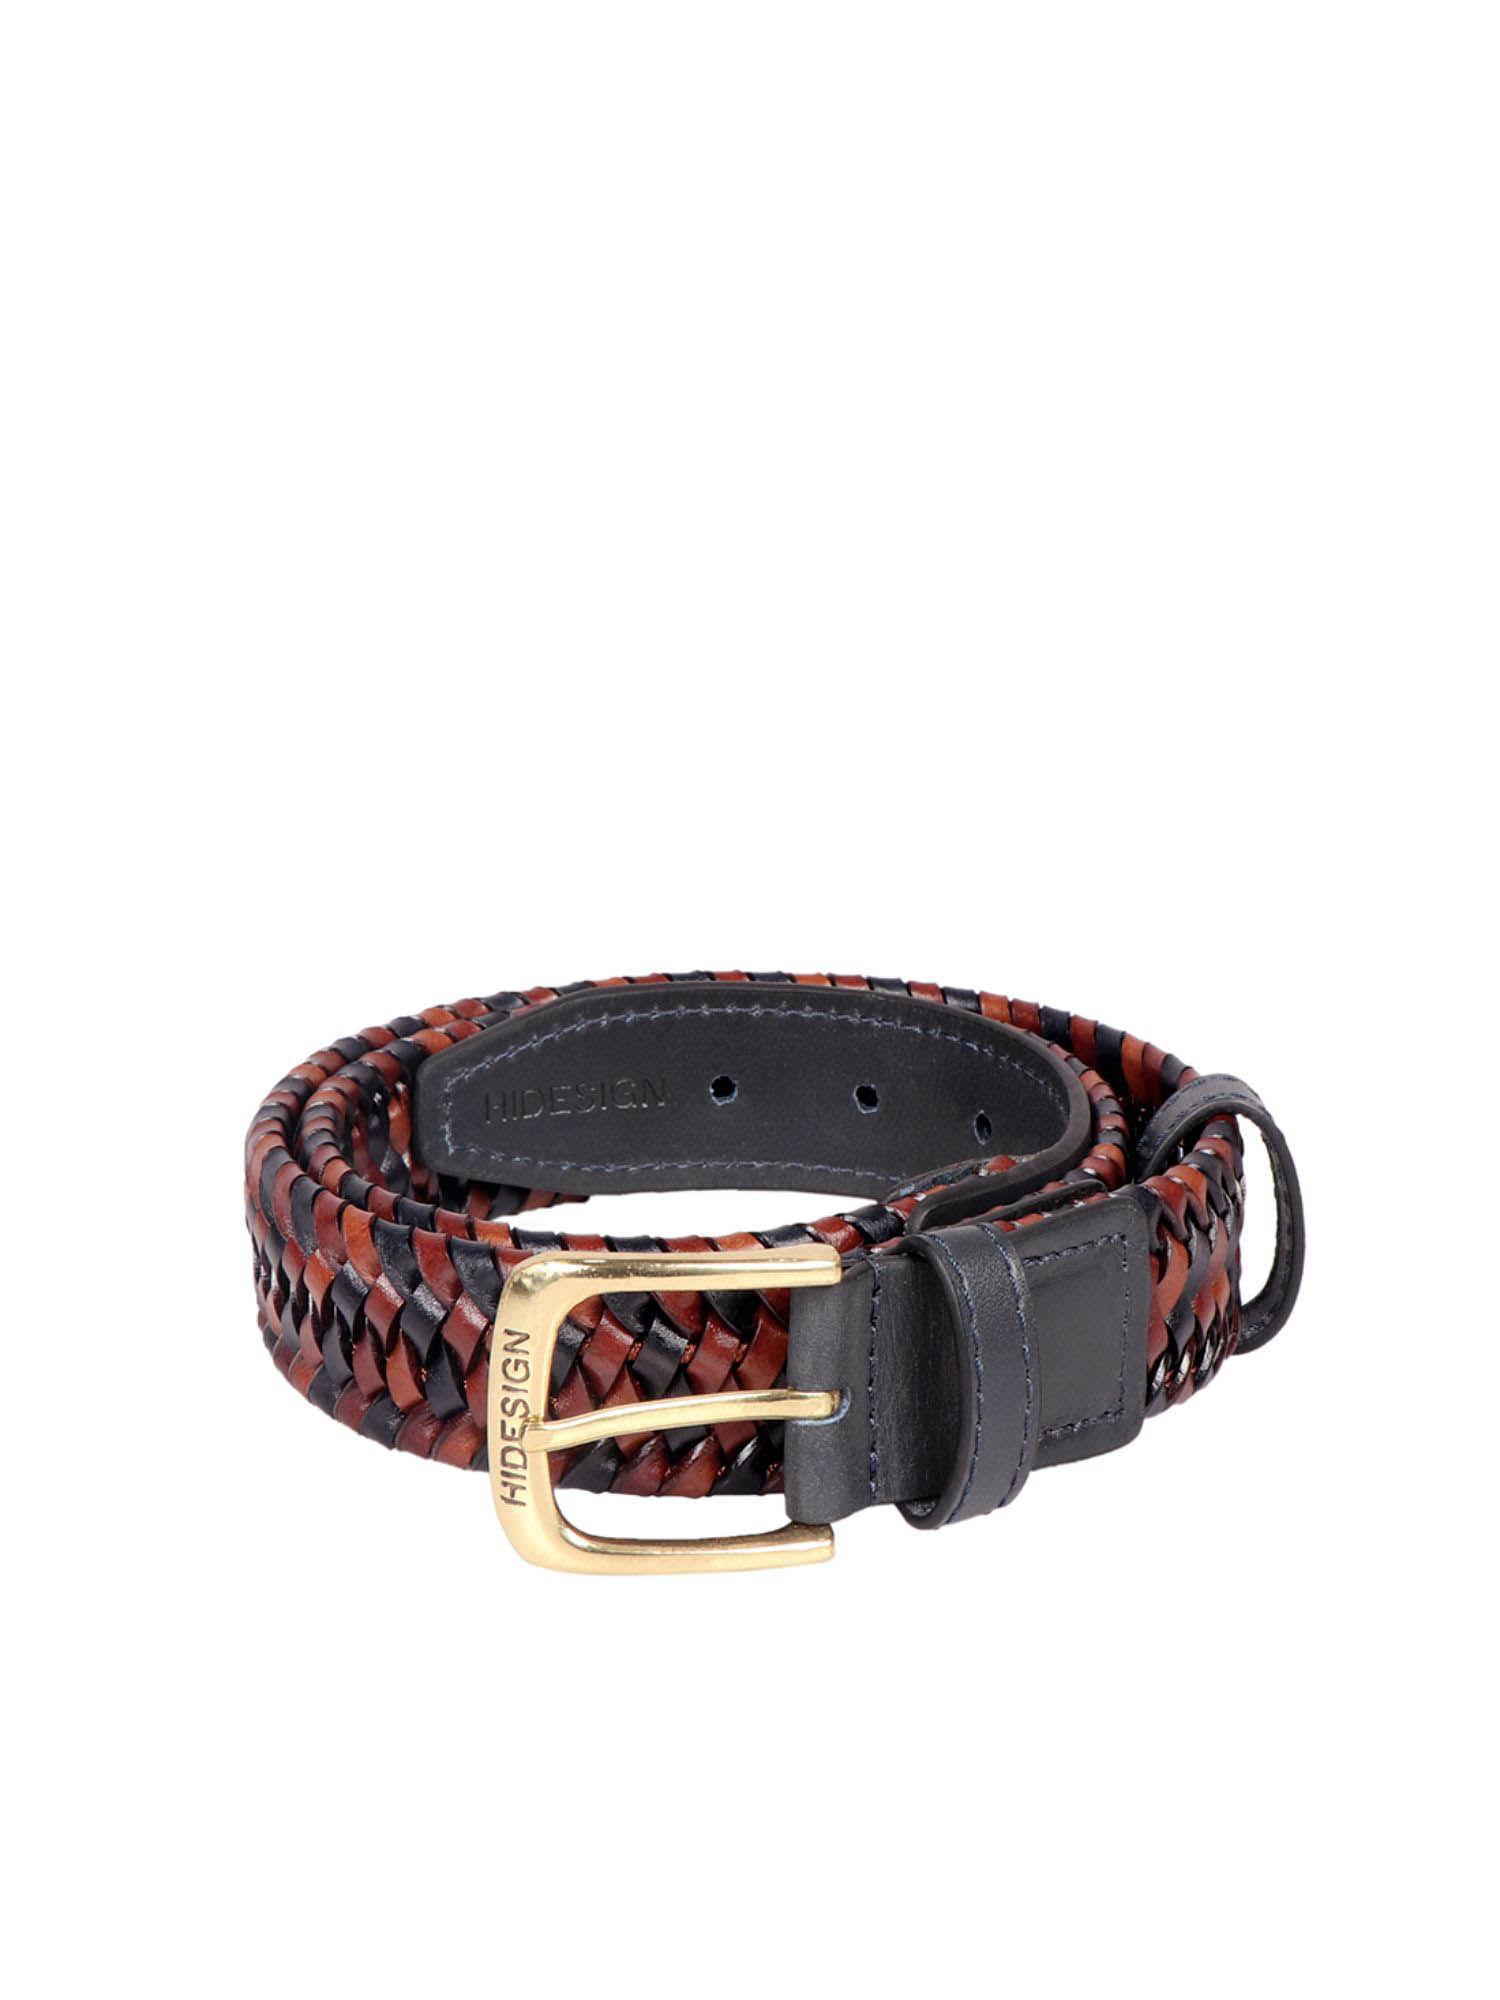 positano-01-braided-mel-ranch-men-belt-multi-color